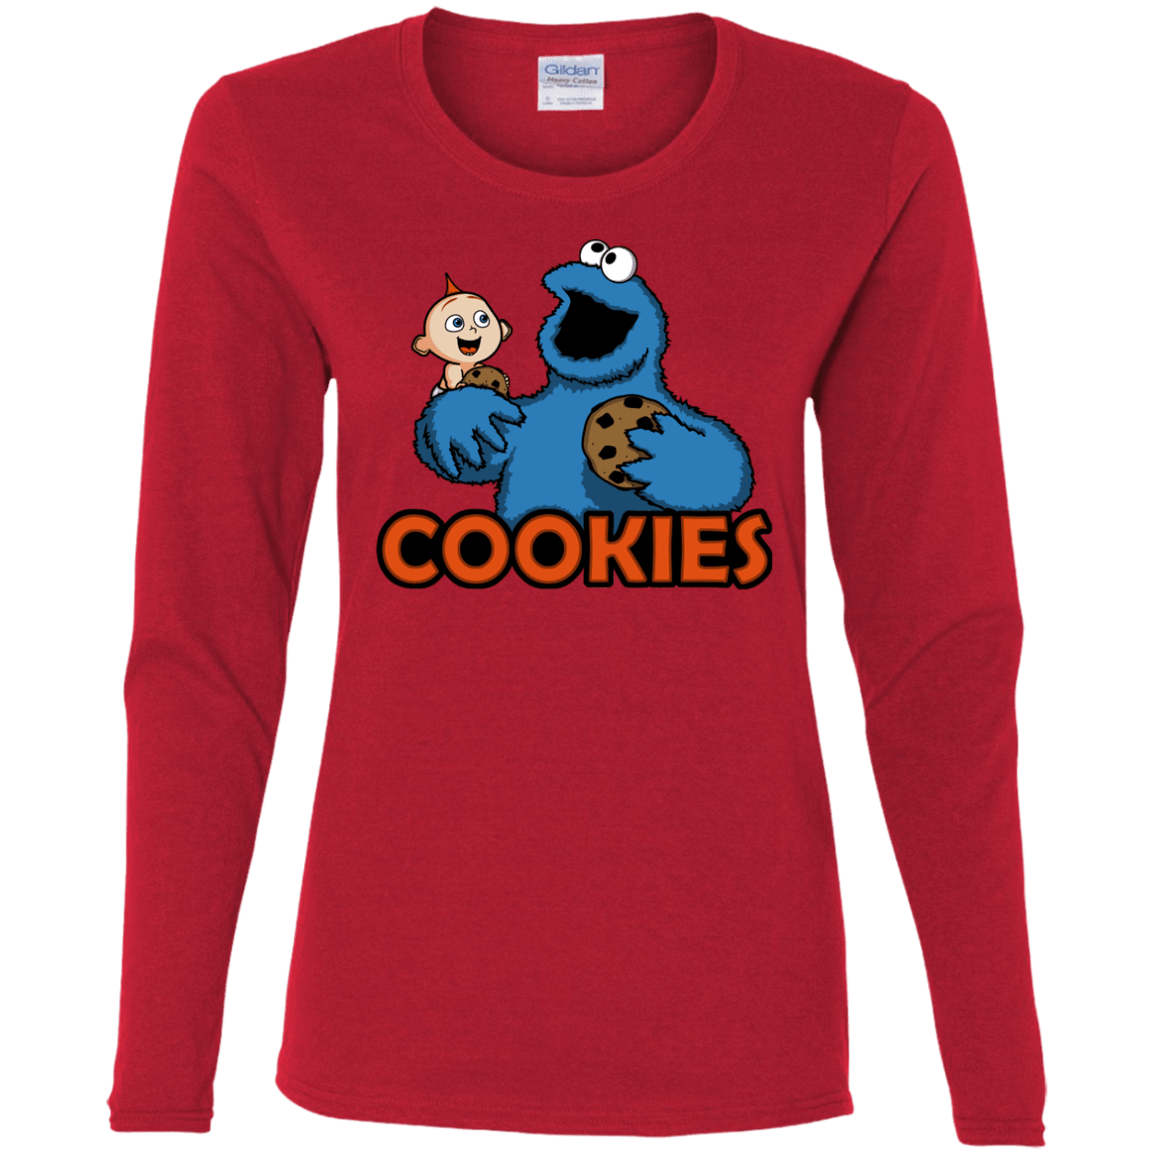 T-Shirts Red / S Cookies Women's Long Sleeve T-Shirt